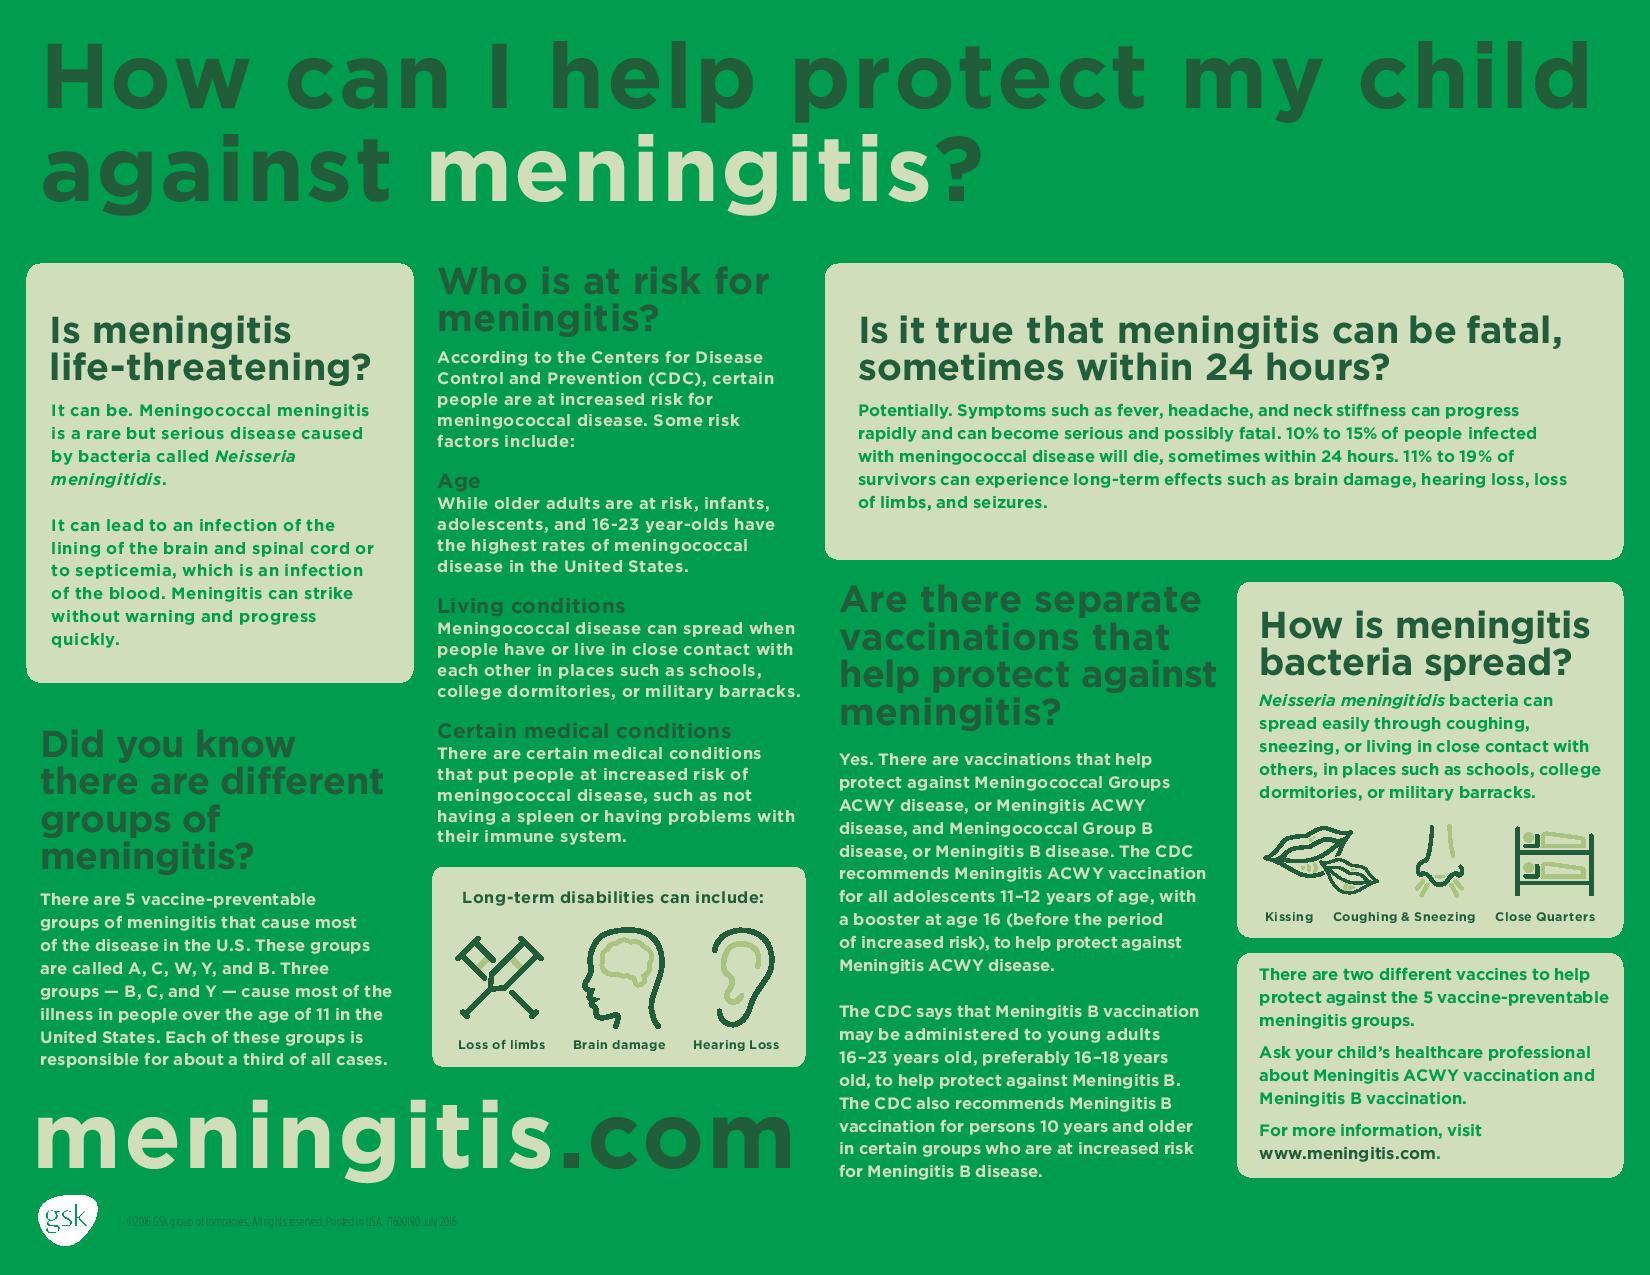 How can I help protect my child against meningitis